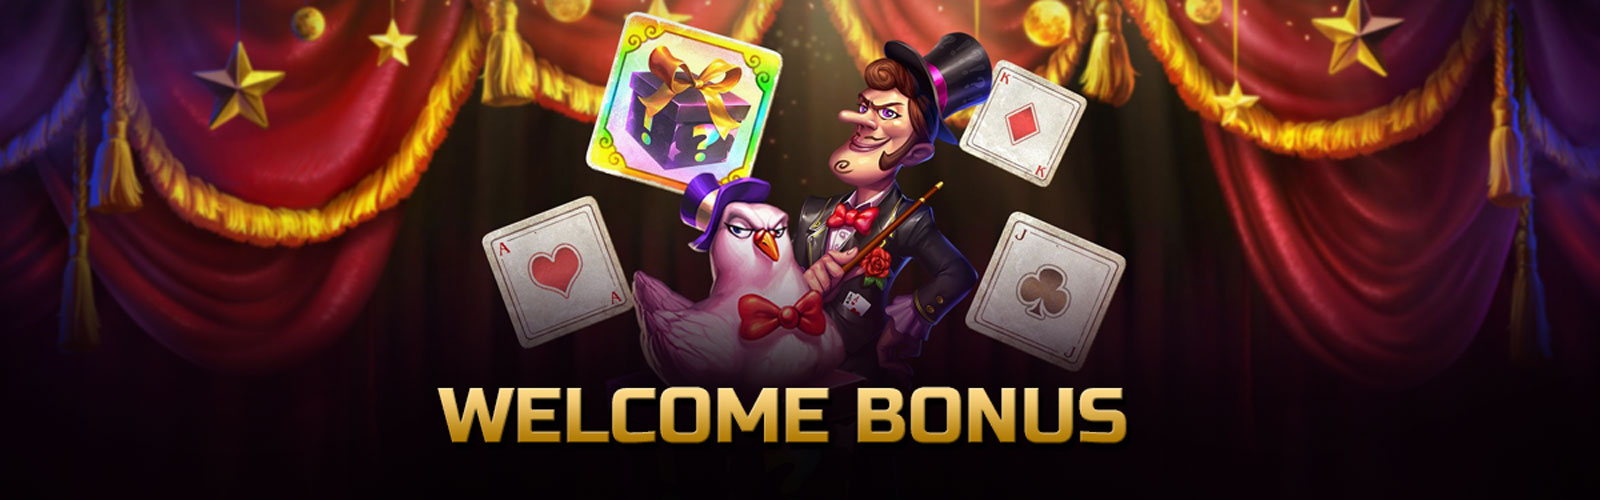 AceHigh Poker Bonus, AceHigh Poker Welcome Bonus